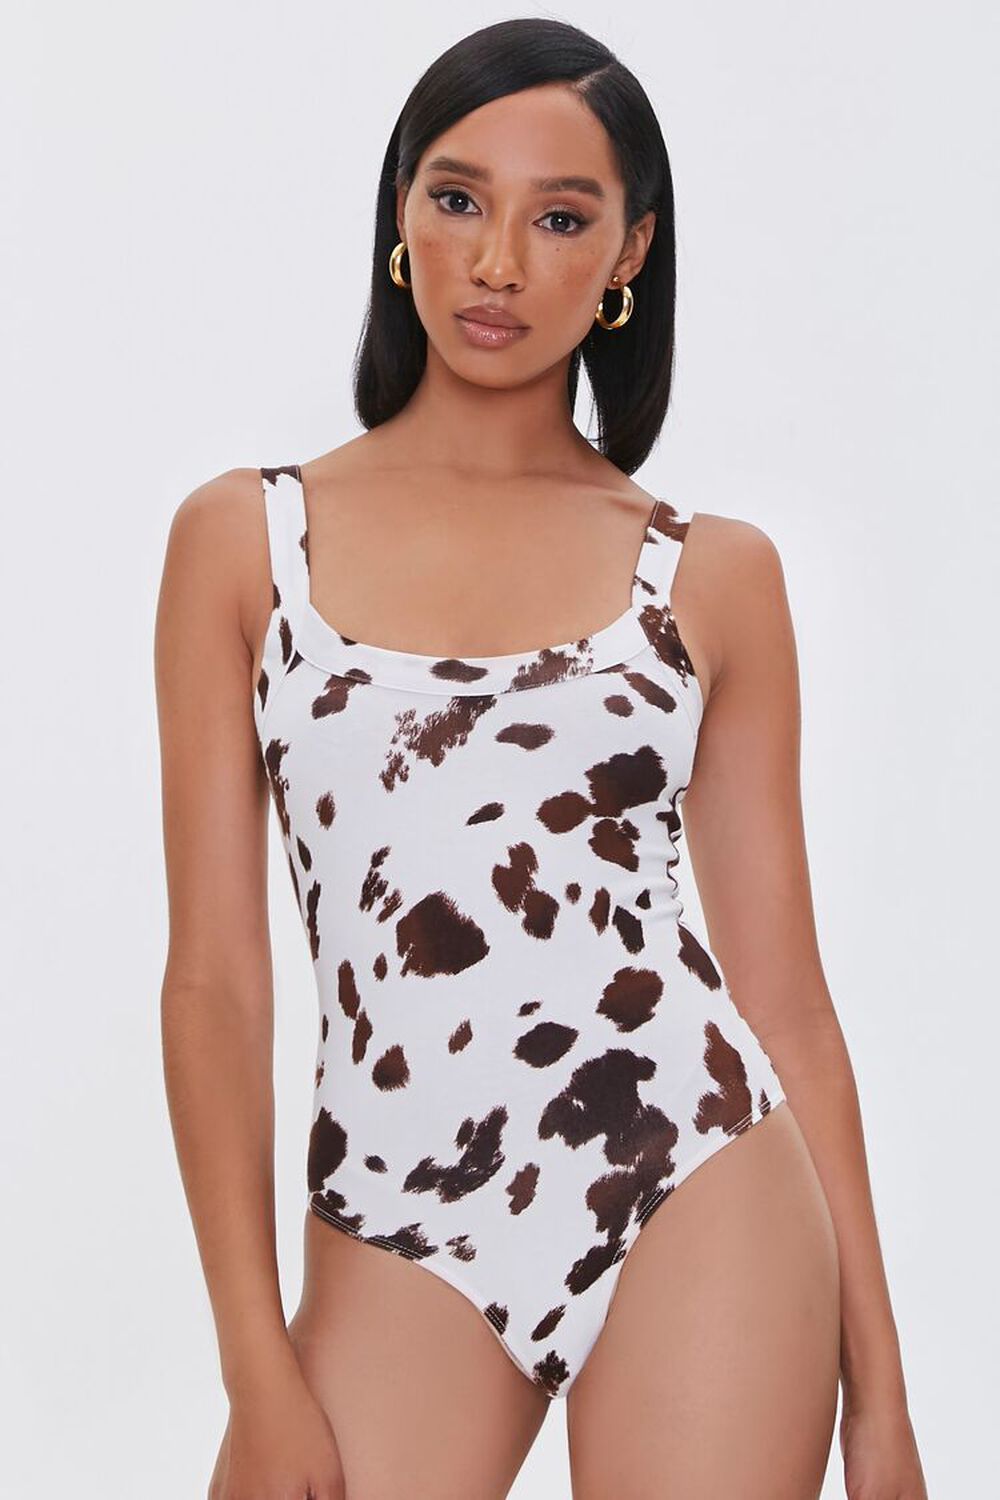 Cow Print Bodysuit